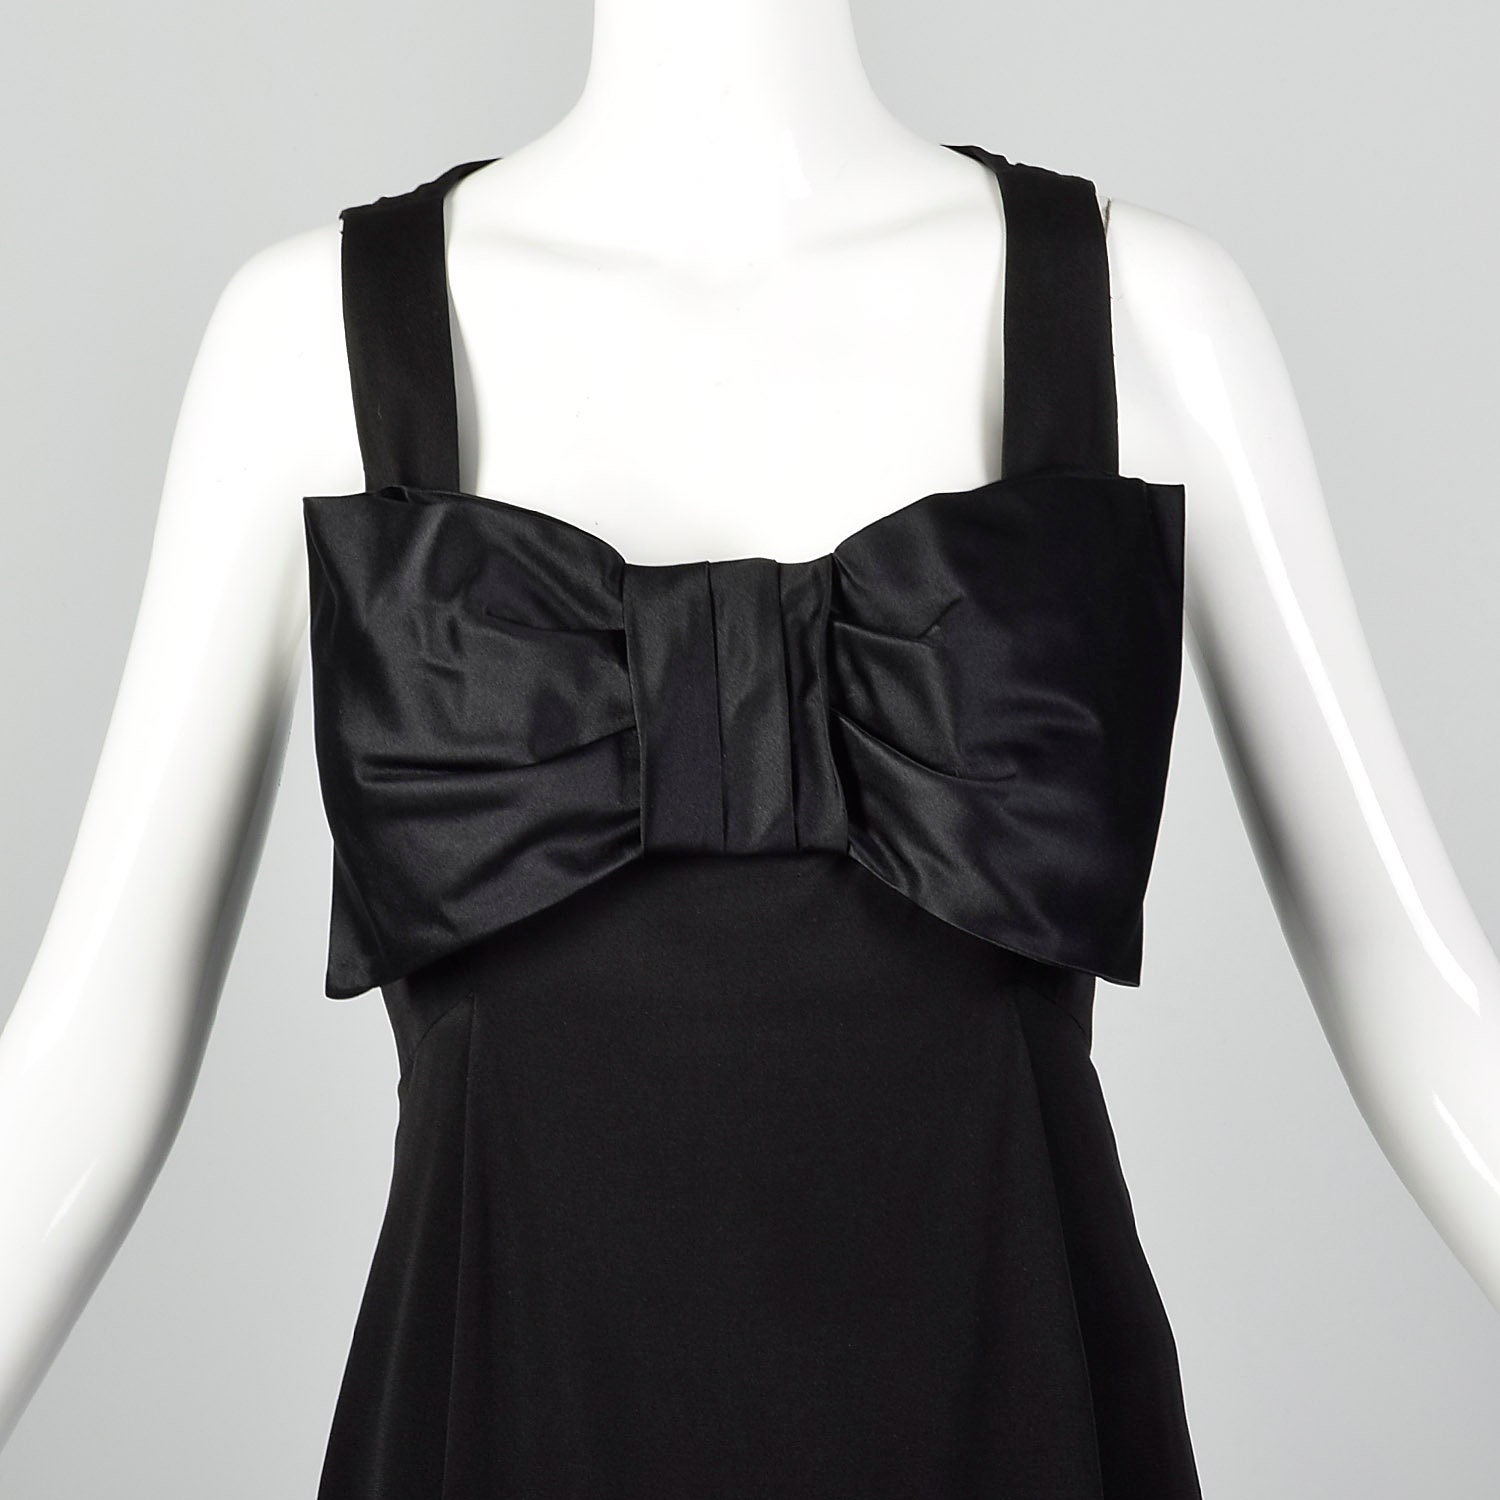 XS Mr. Blackwell 1960s Little Black Dress Vintage Bow Front - Etsy